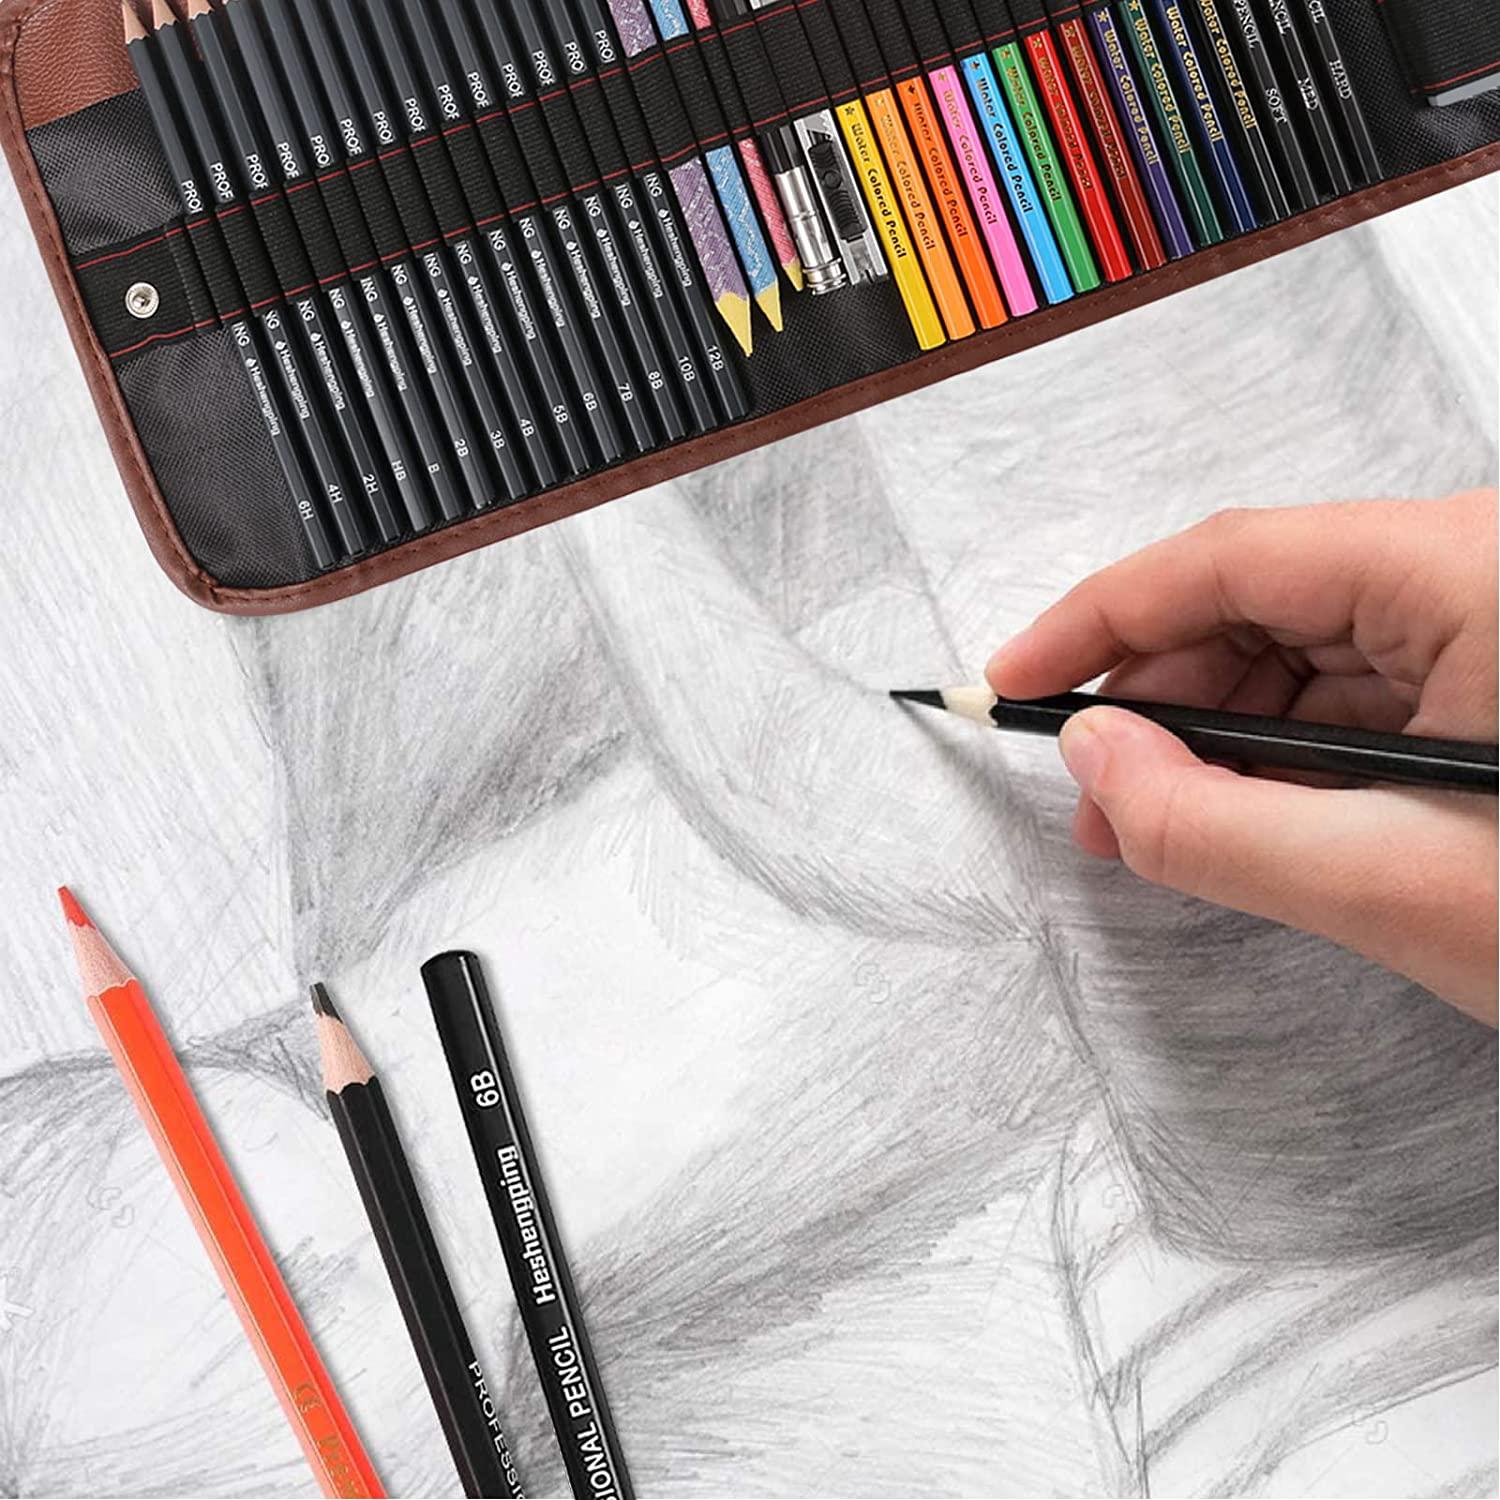 14pcs Artists Sketch Drawing Pencil Set 12B-6H Sketching Art Craft Gift  Black